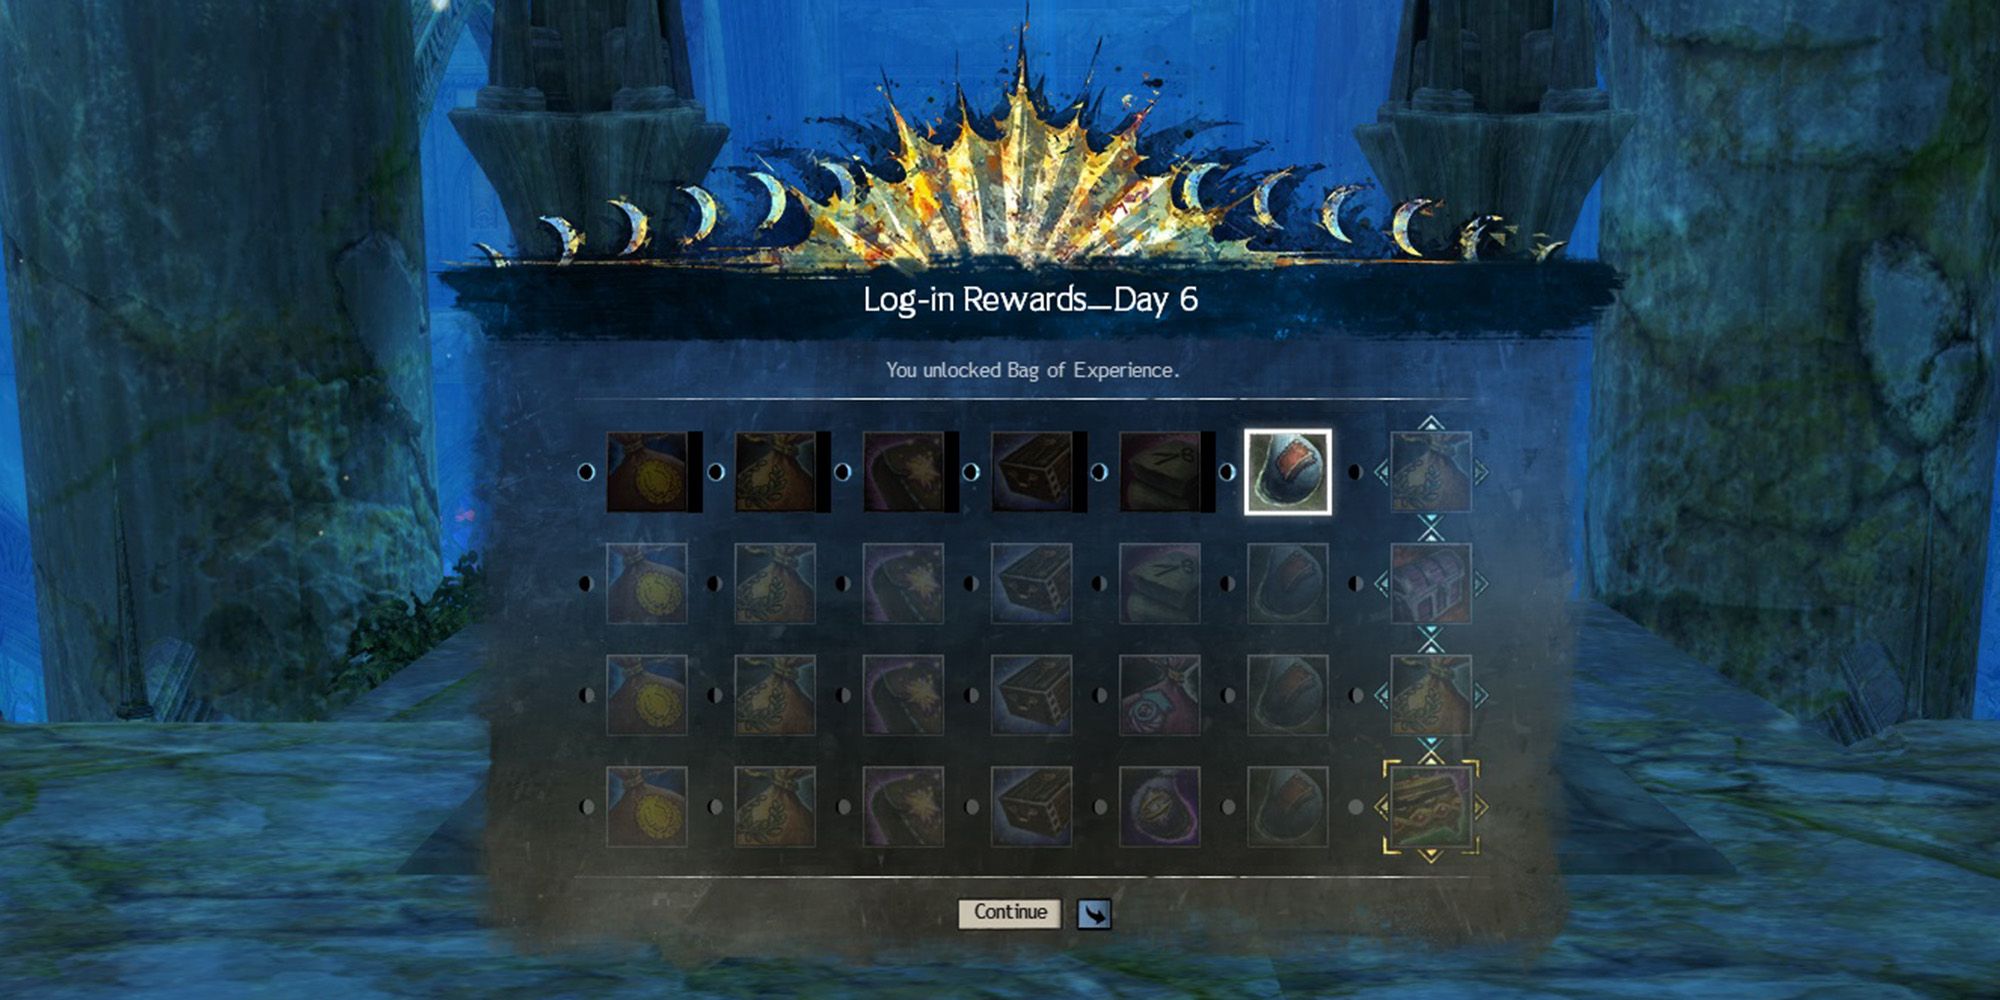 log in rewards screen upon logging in